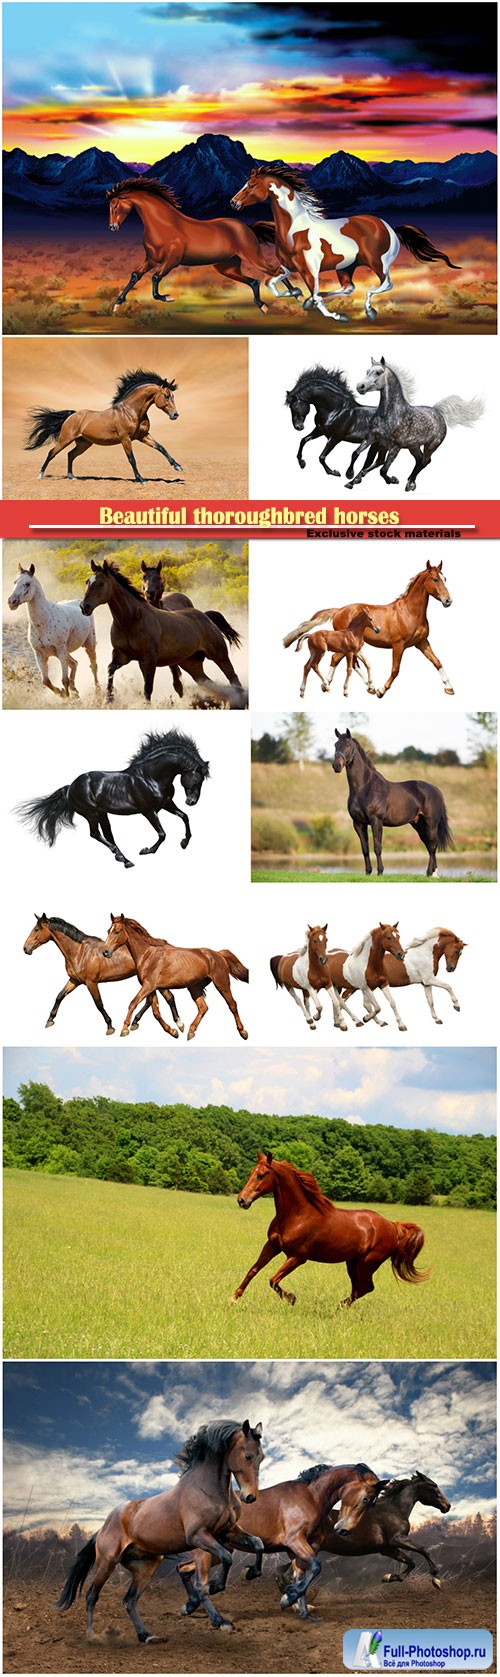 Beautiful thoroughbred horses